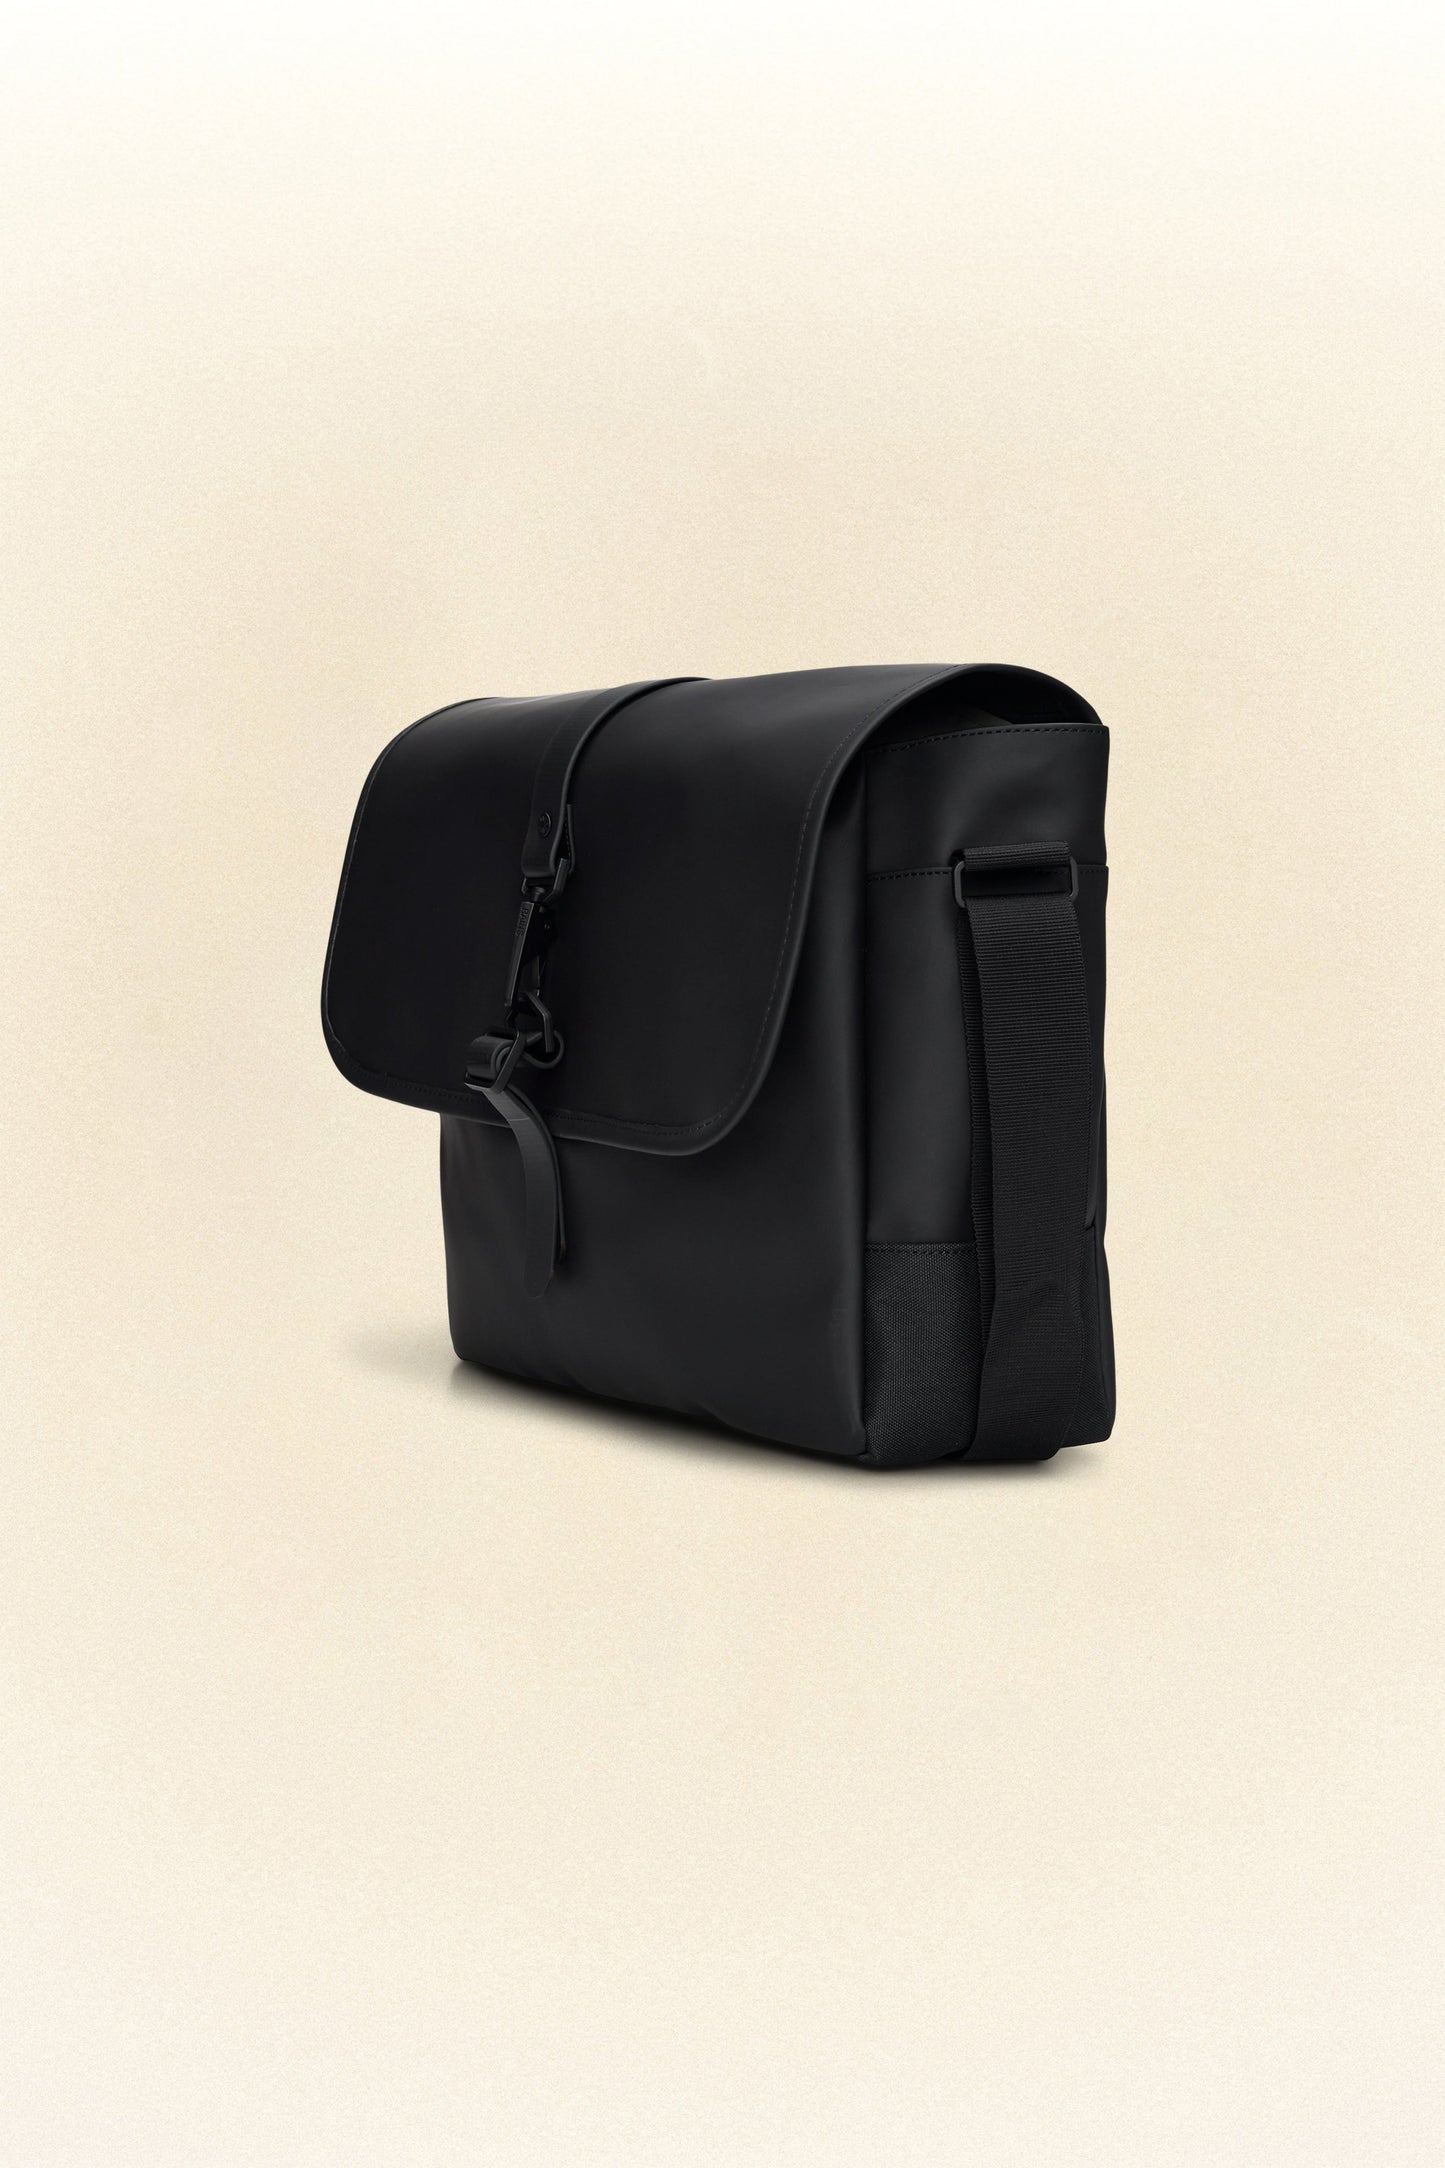 Messenger Bag W3, Black, Tasche